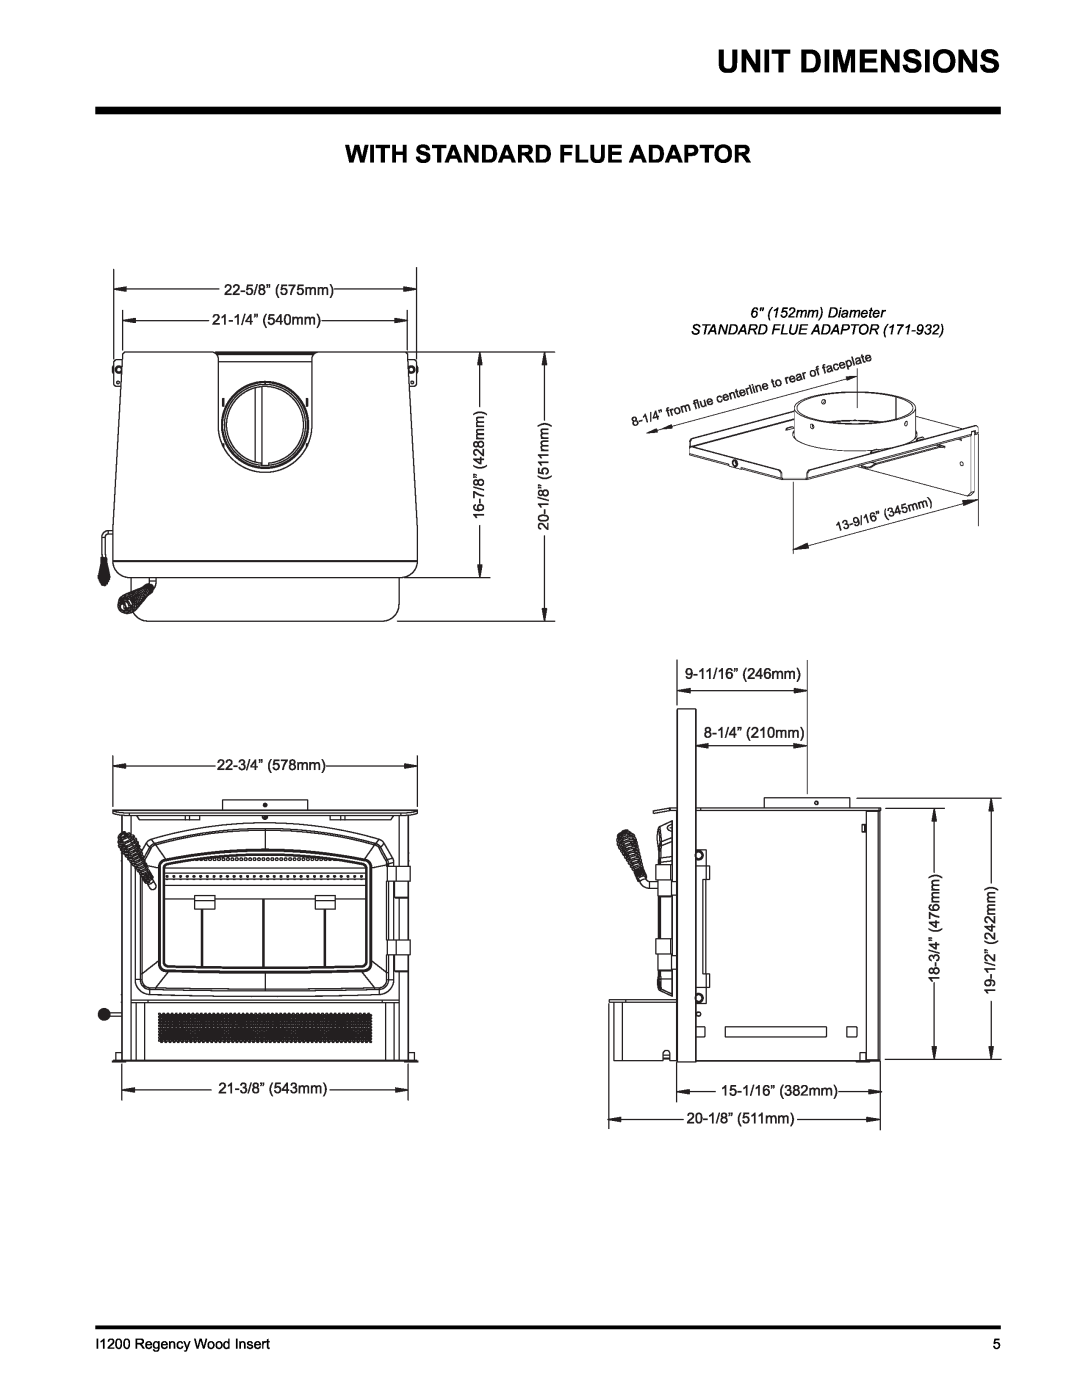 Regency I1200S installation manual Unit Dimensions, With Standard Flue Adaptor, 6 152mm Diameter STANDARD FLUE ADAPTOR 